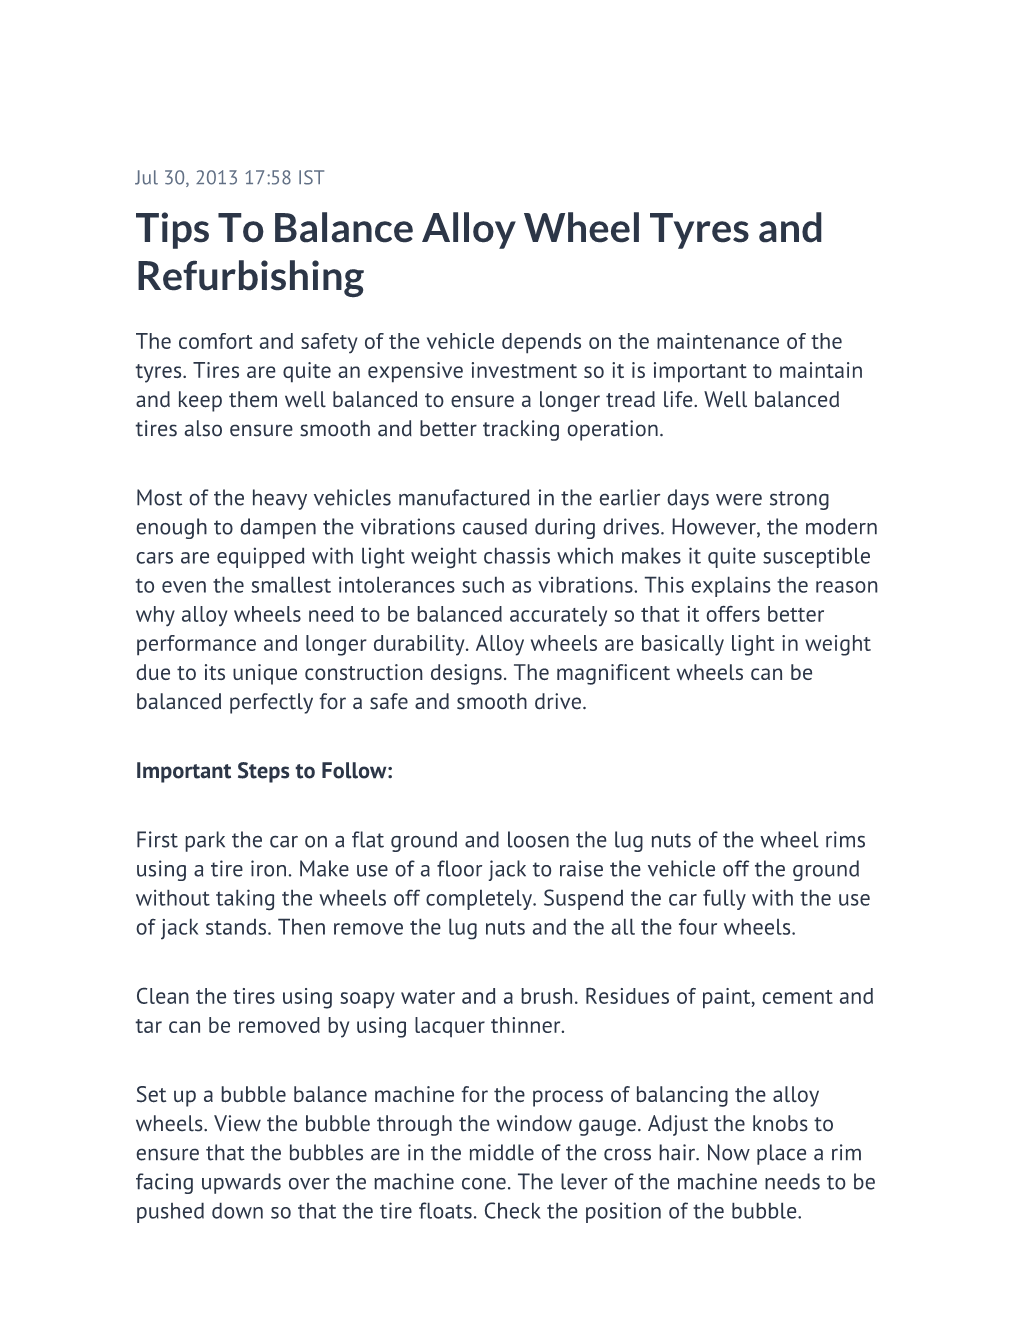 Tips to Balance Alloy Wheel Tyres and Refurbishing